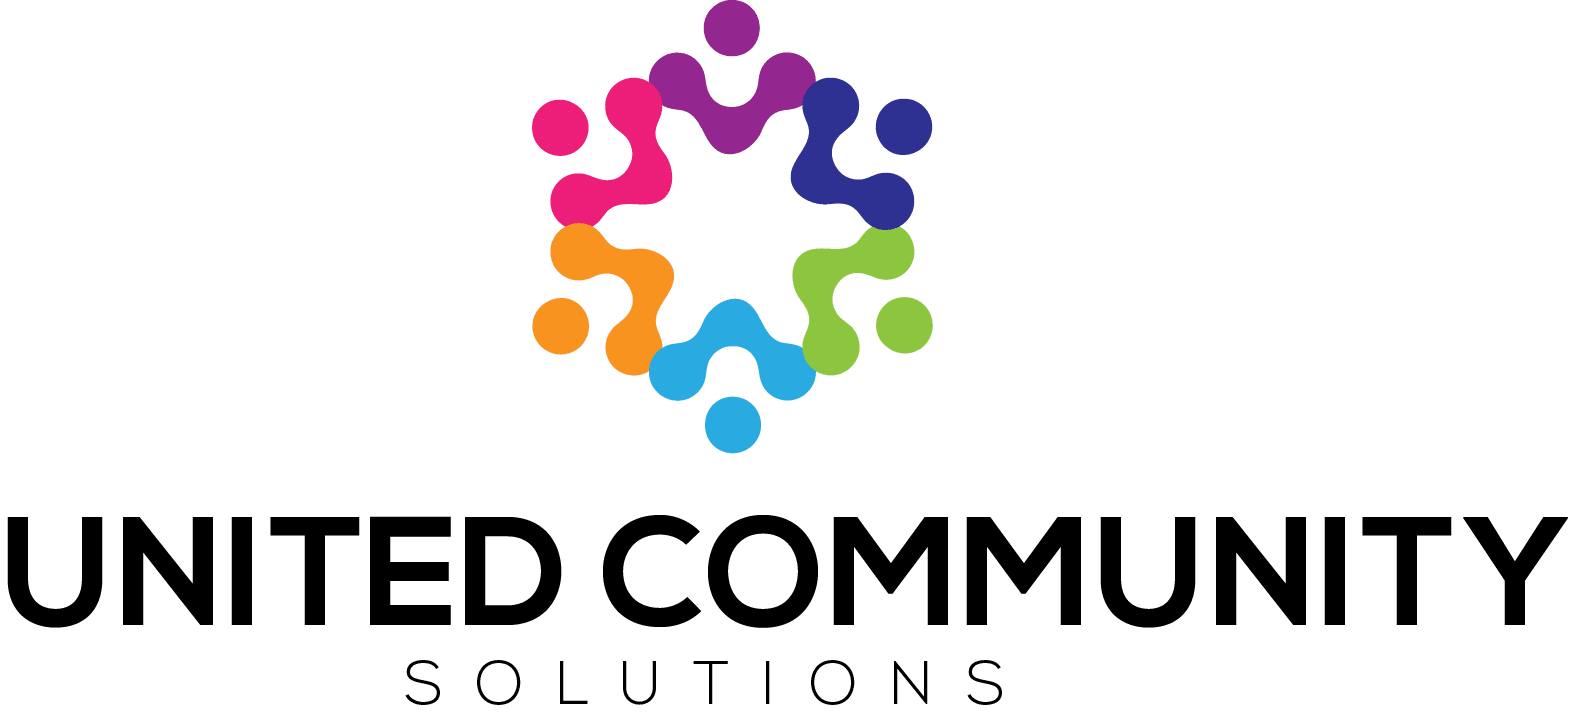 United Community Solutions logo